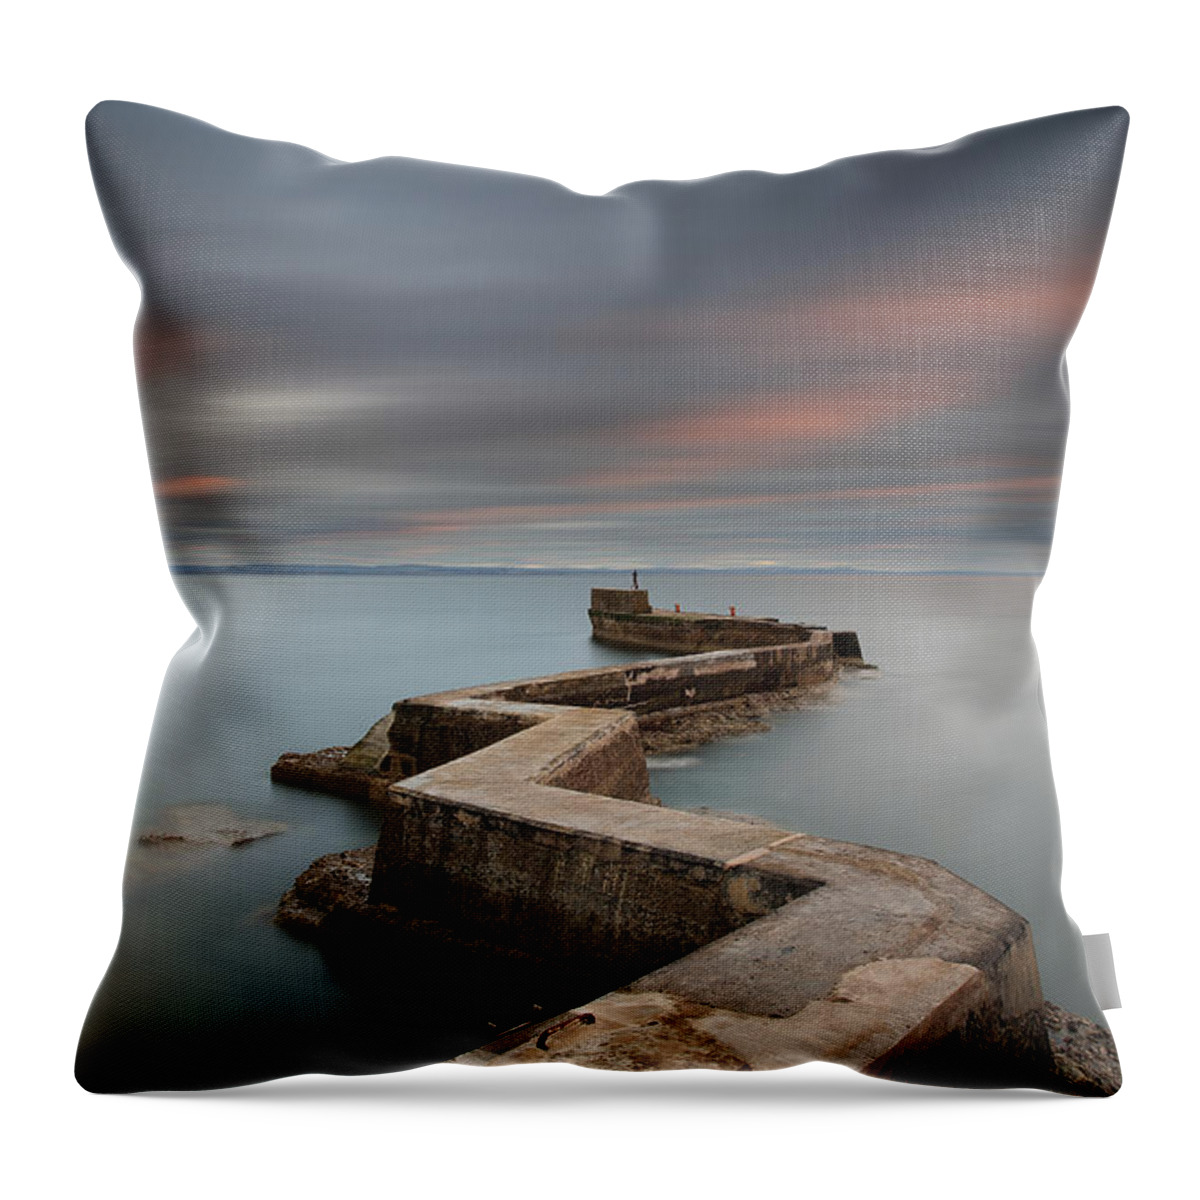 St Monans Pier Throw Pillow featuring the photograph St Monans Pier at Sunset #1 by Maria Gaellman